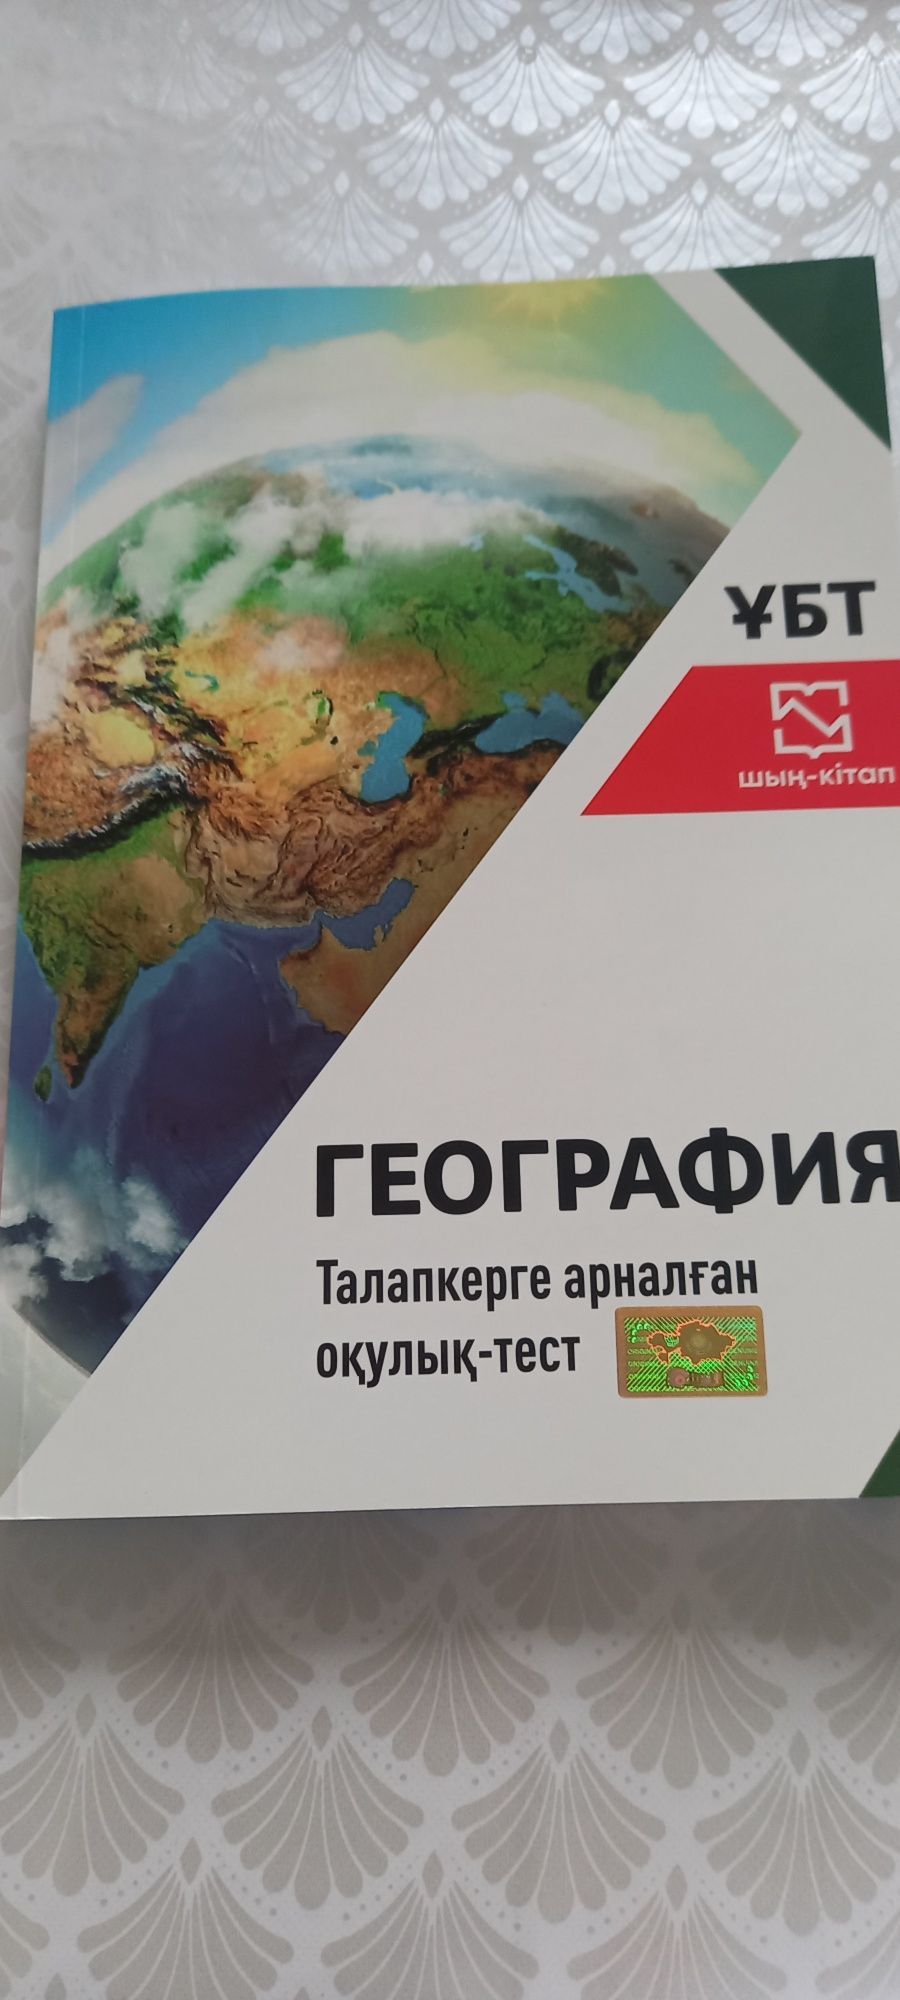 Шын книга.на казахском